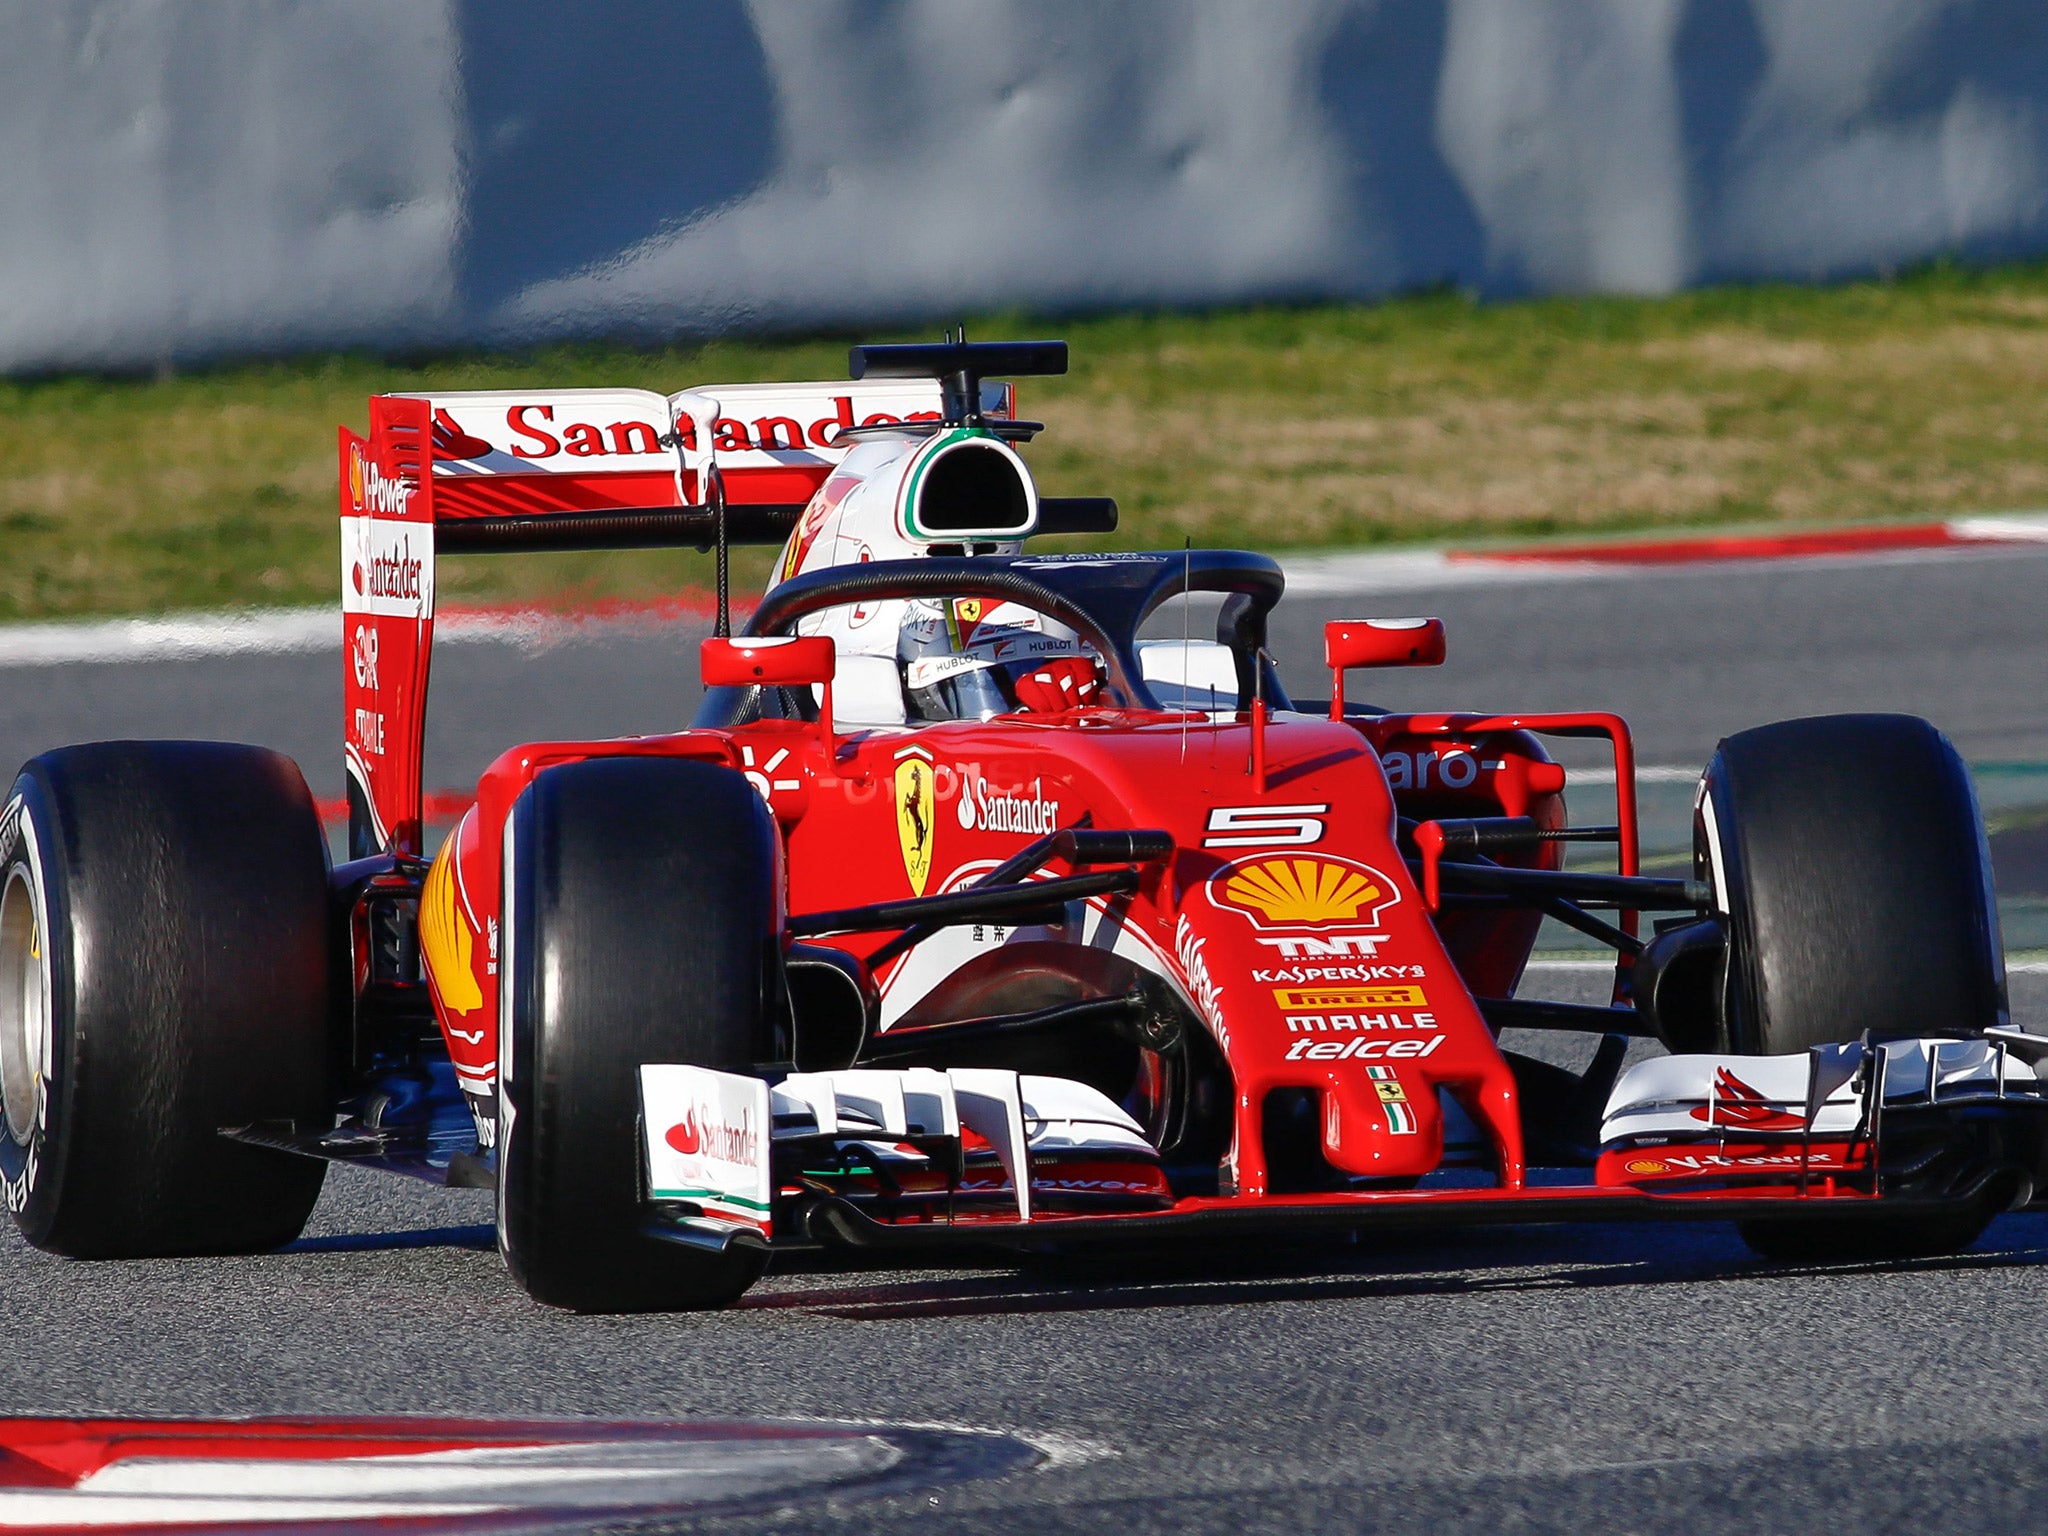 Both Kimi Raikkonen and Sebastian Vettel tested the Halo device in pre-season